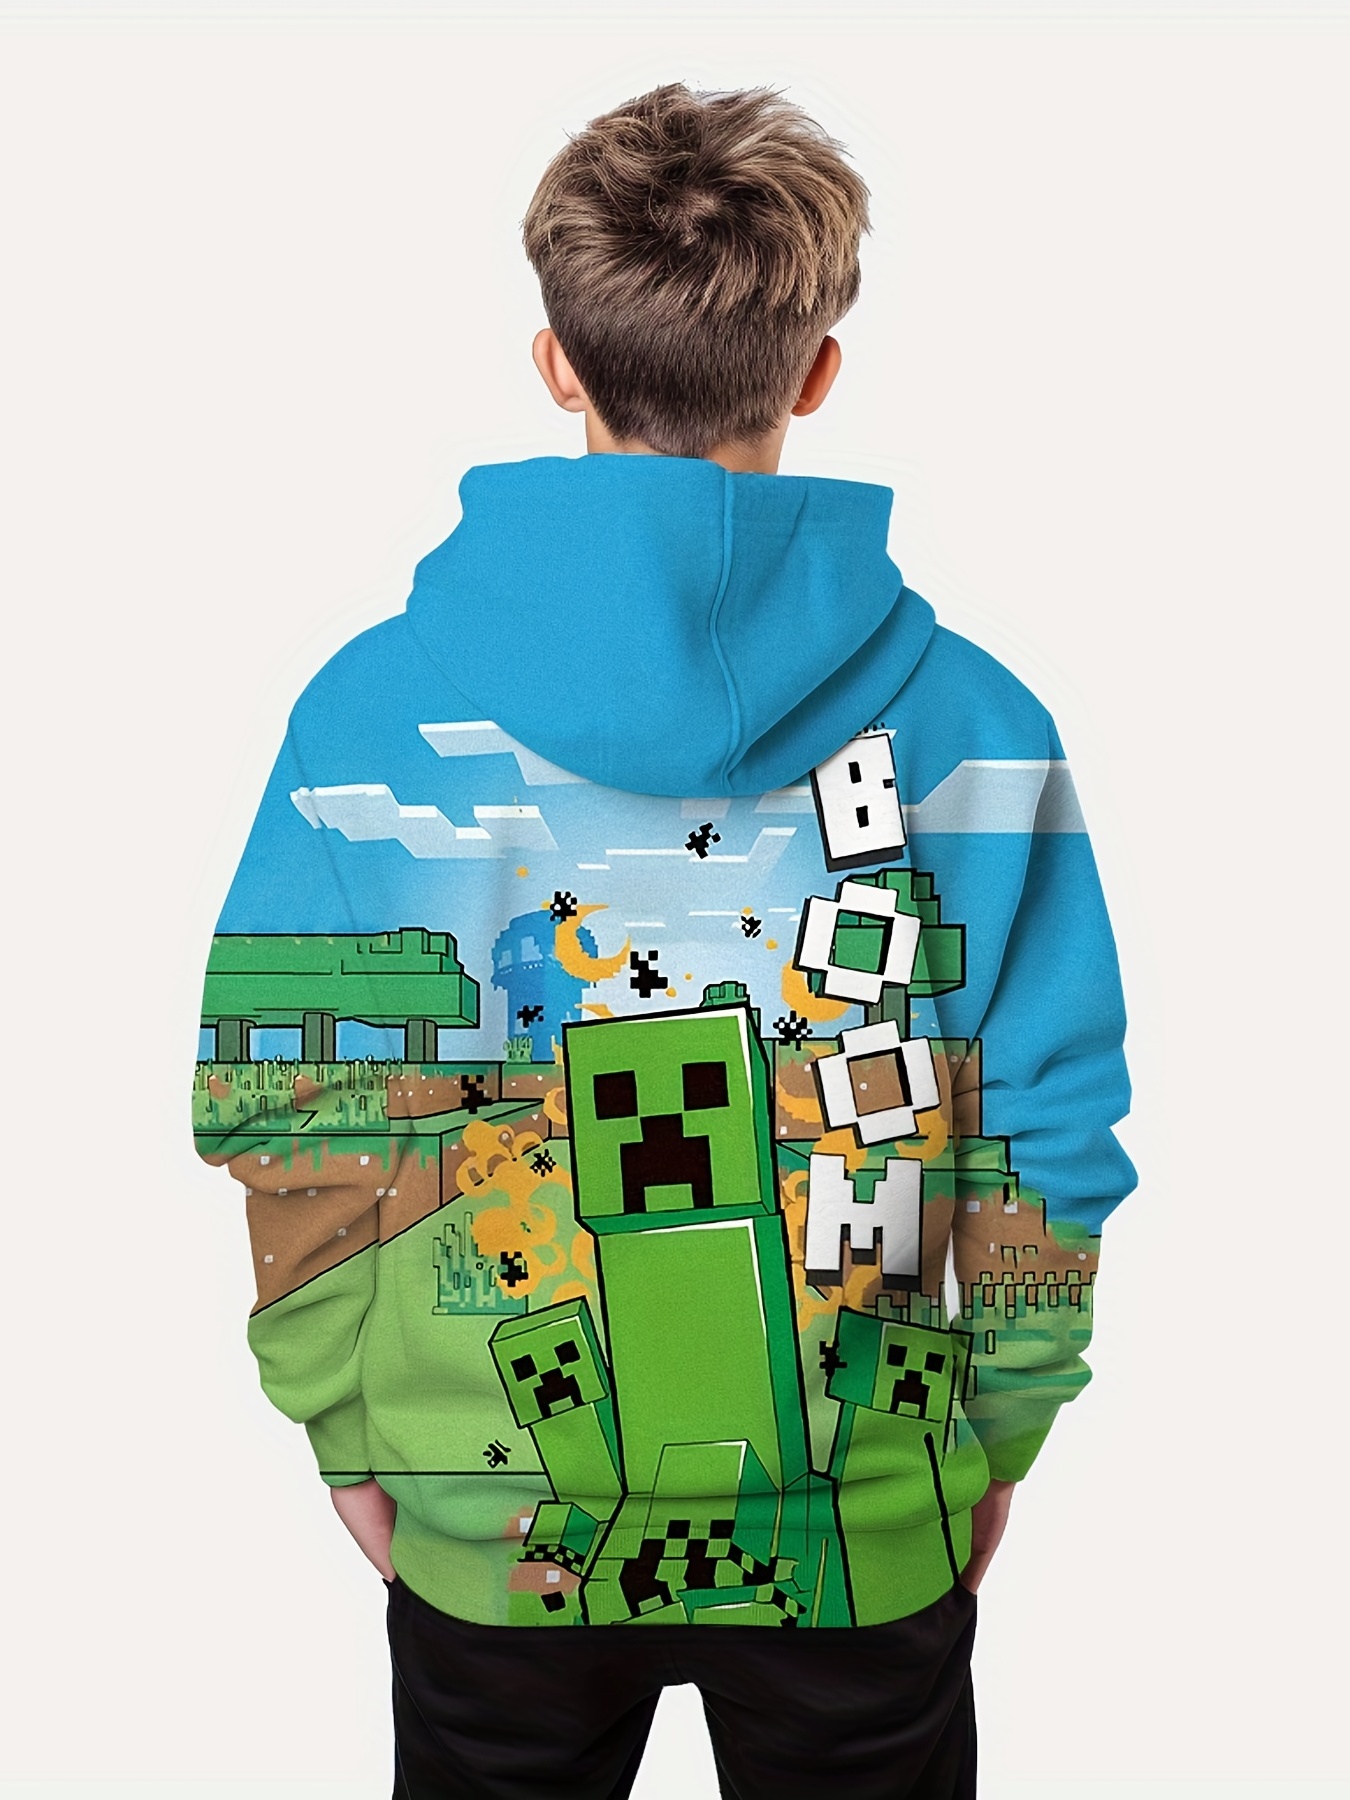 Minecraft Hoodie Boys Creeper Green Jumper Gamer Kids Hooded